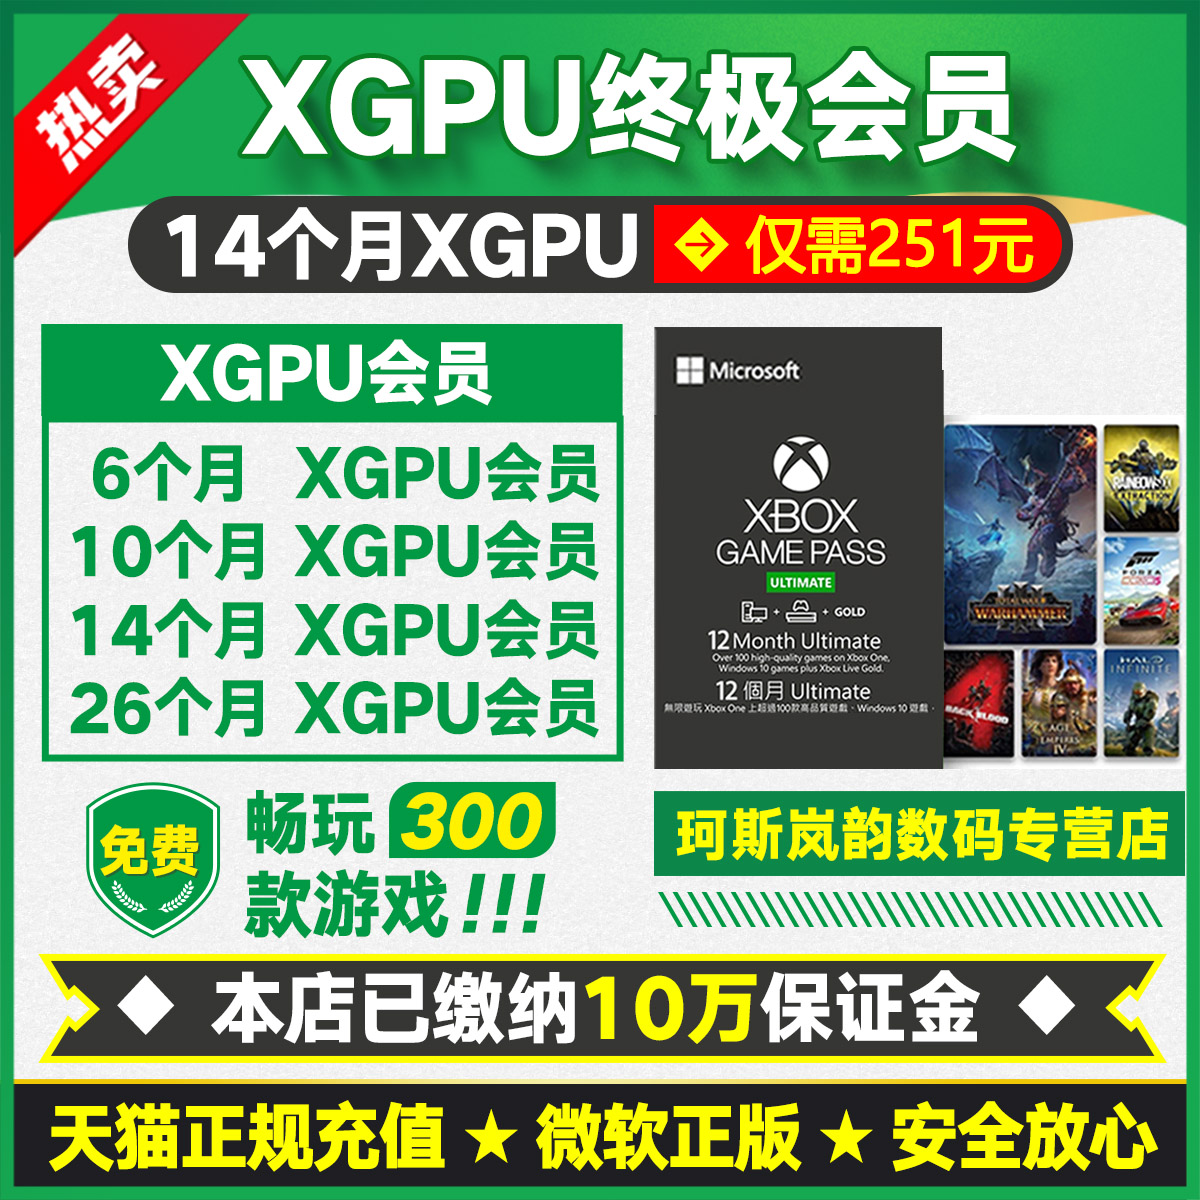 xgpu会员兑换码一年xgp会员xgpu三年兑换码xbox会员西瓜皮pc xbox game pass eaplay金会员微软xbox会员秒发